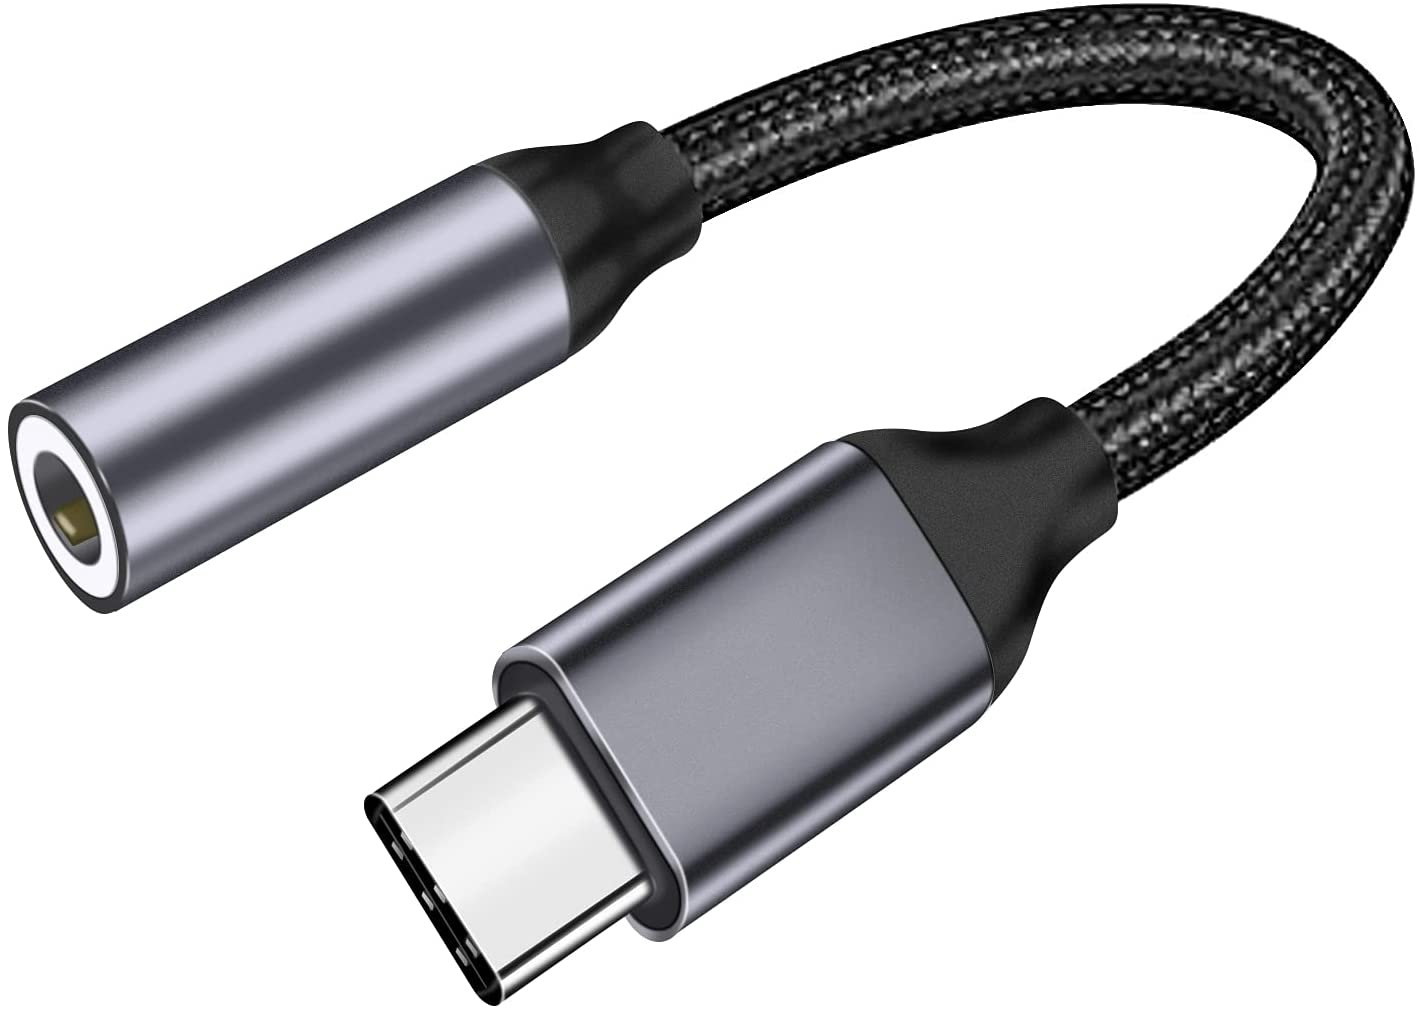 USB C to 3.5mm Headphone Jack Adapter.